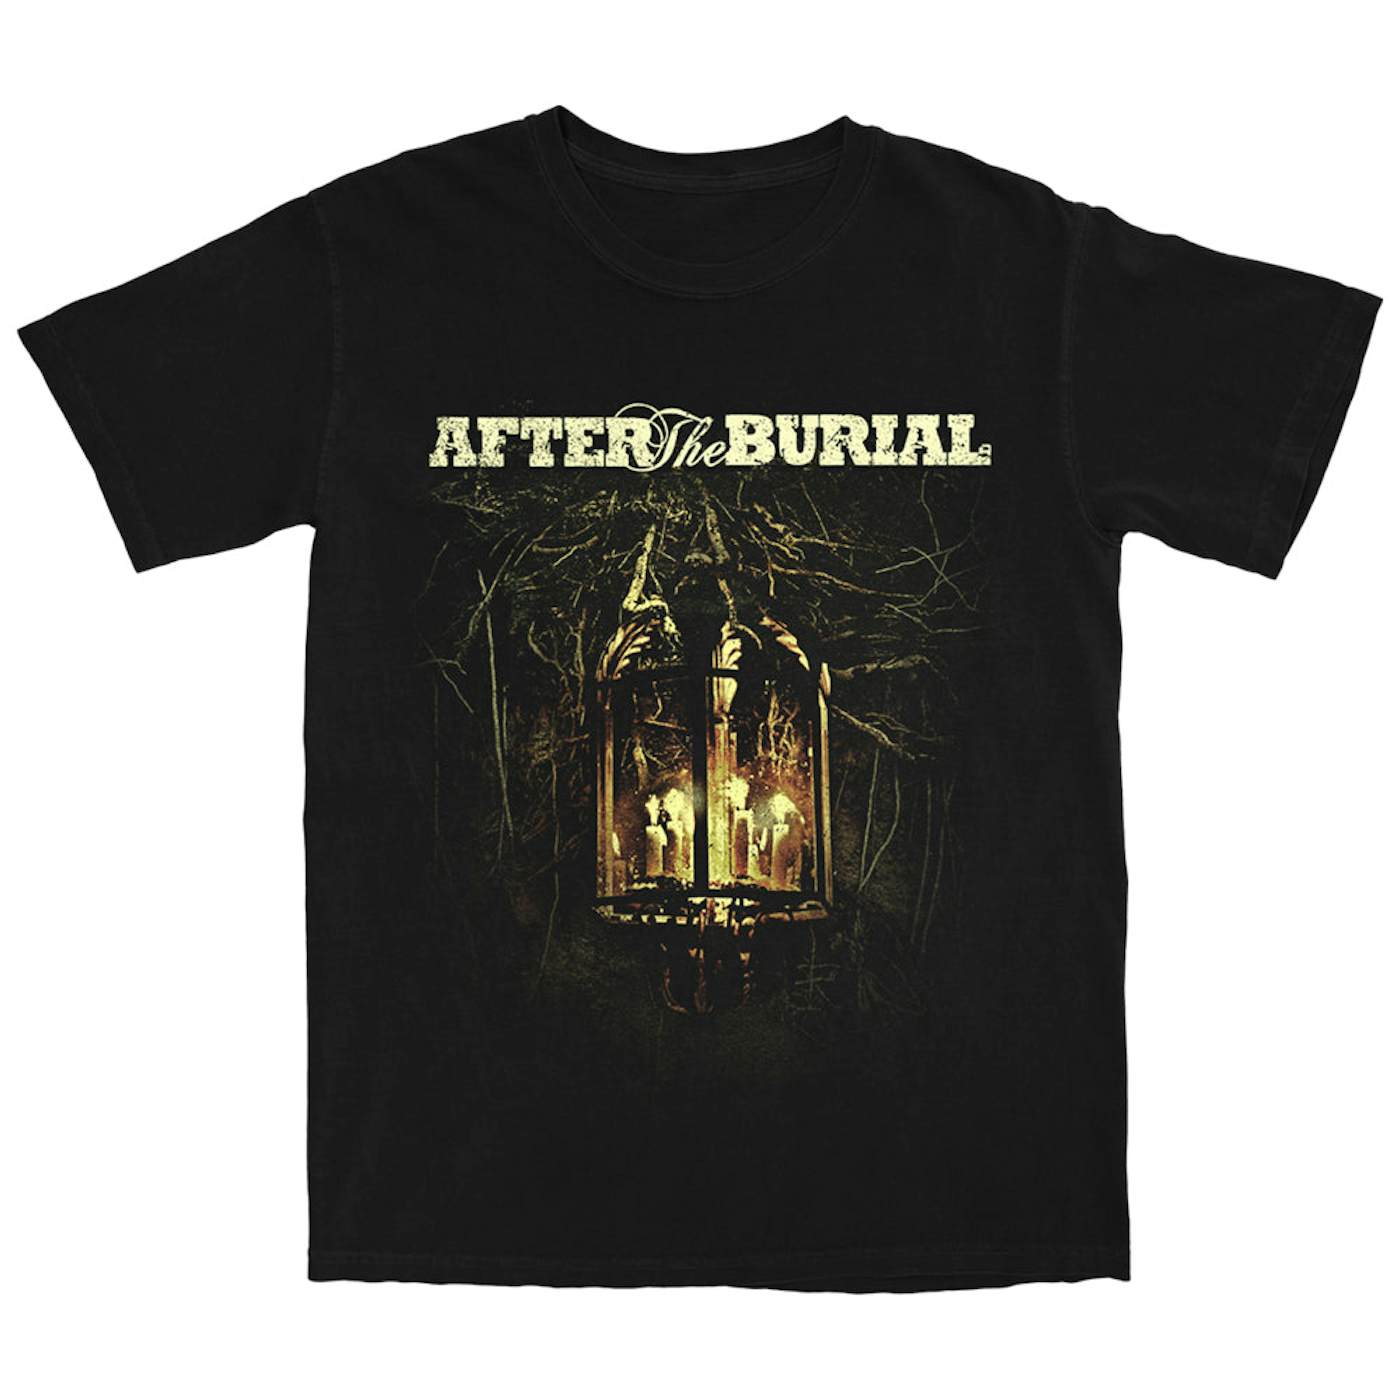 After The Burial - "Dig Deep" Album Art Tee